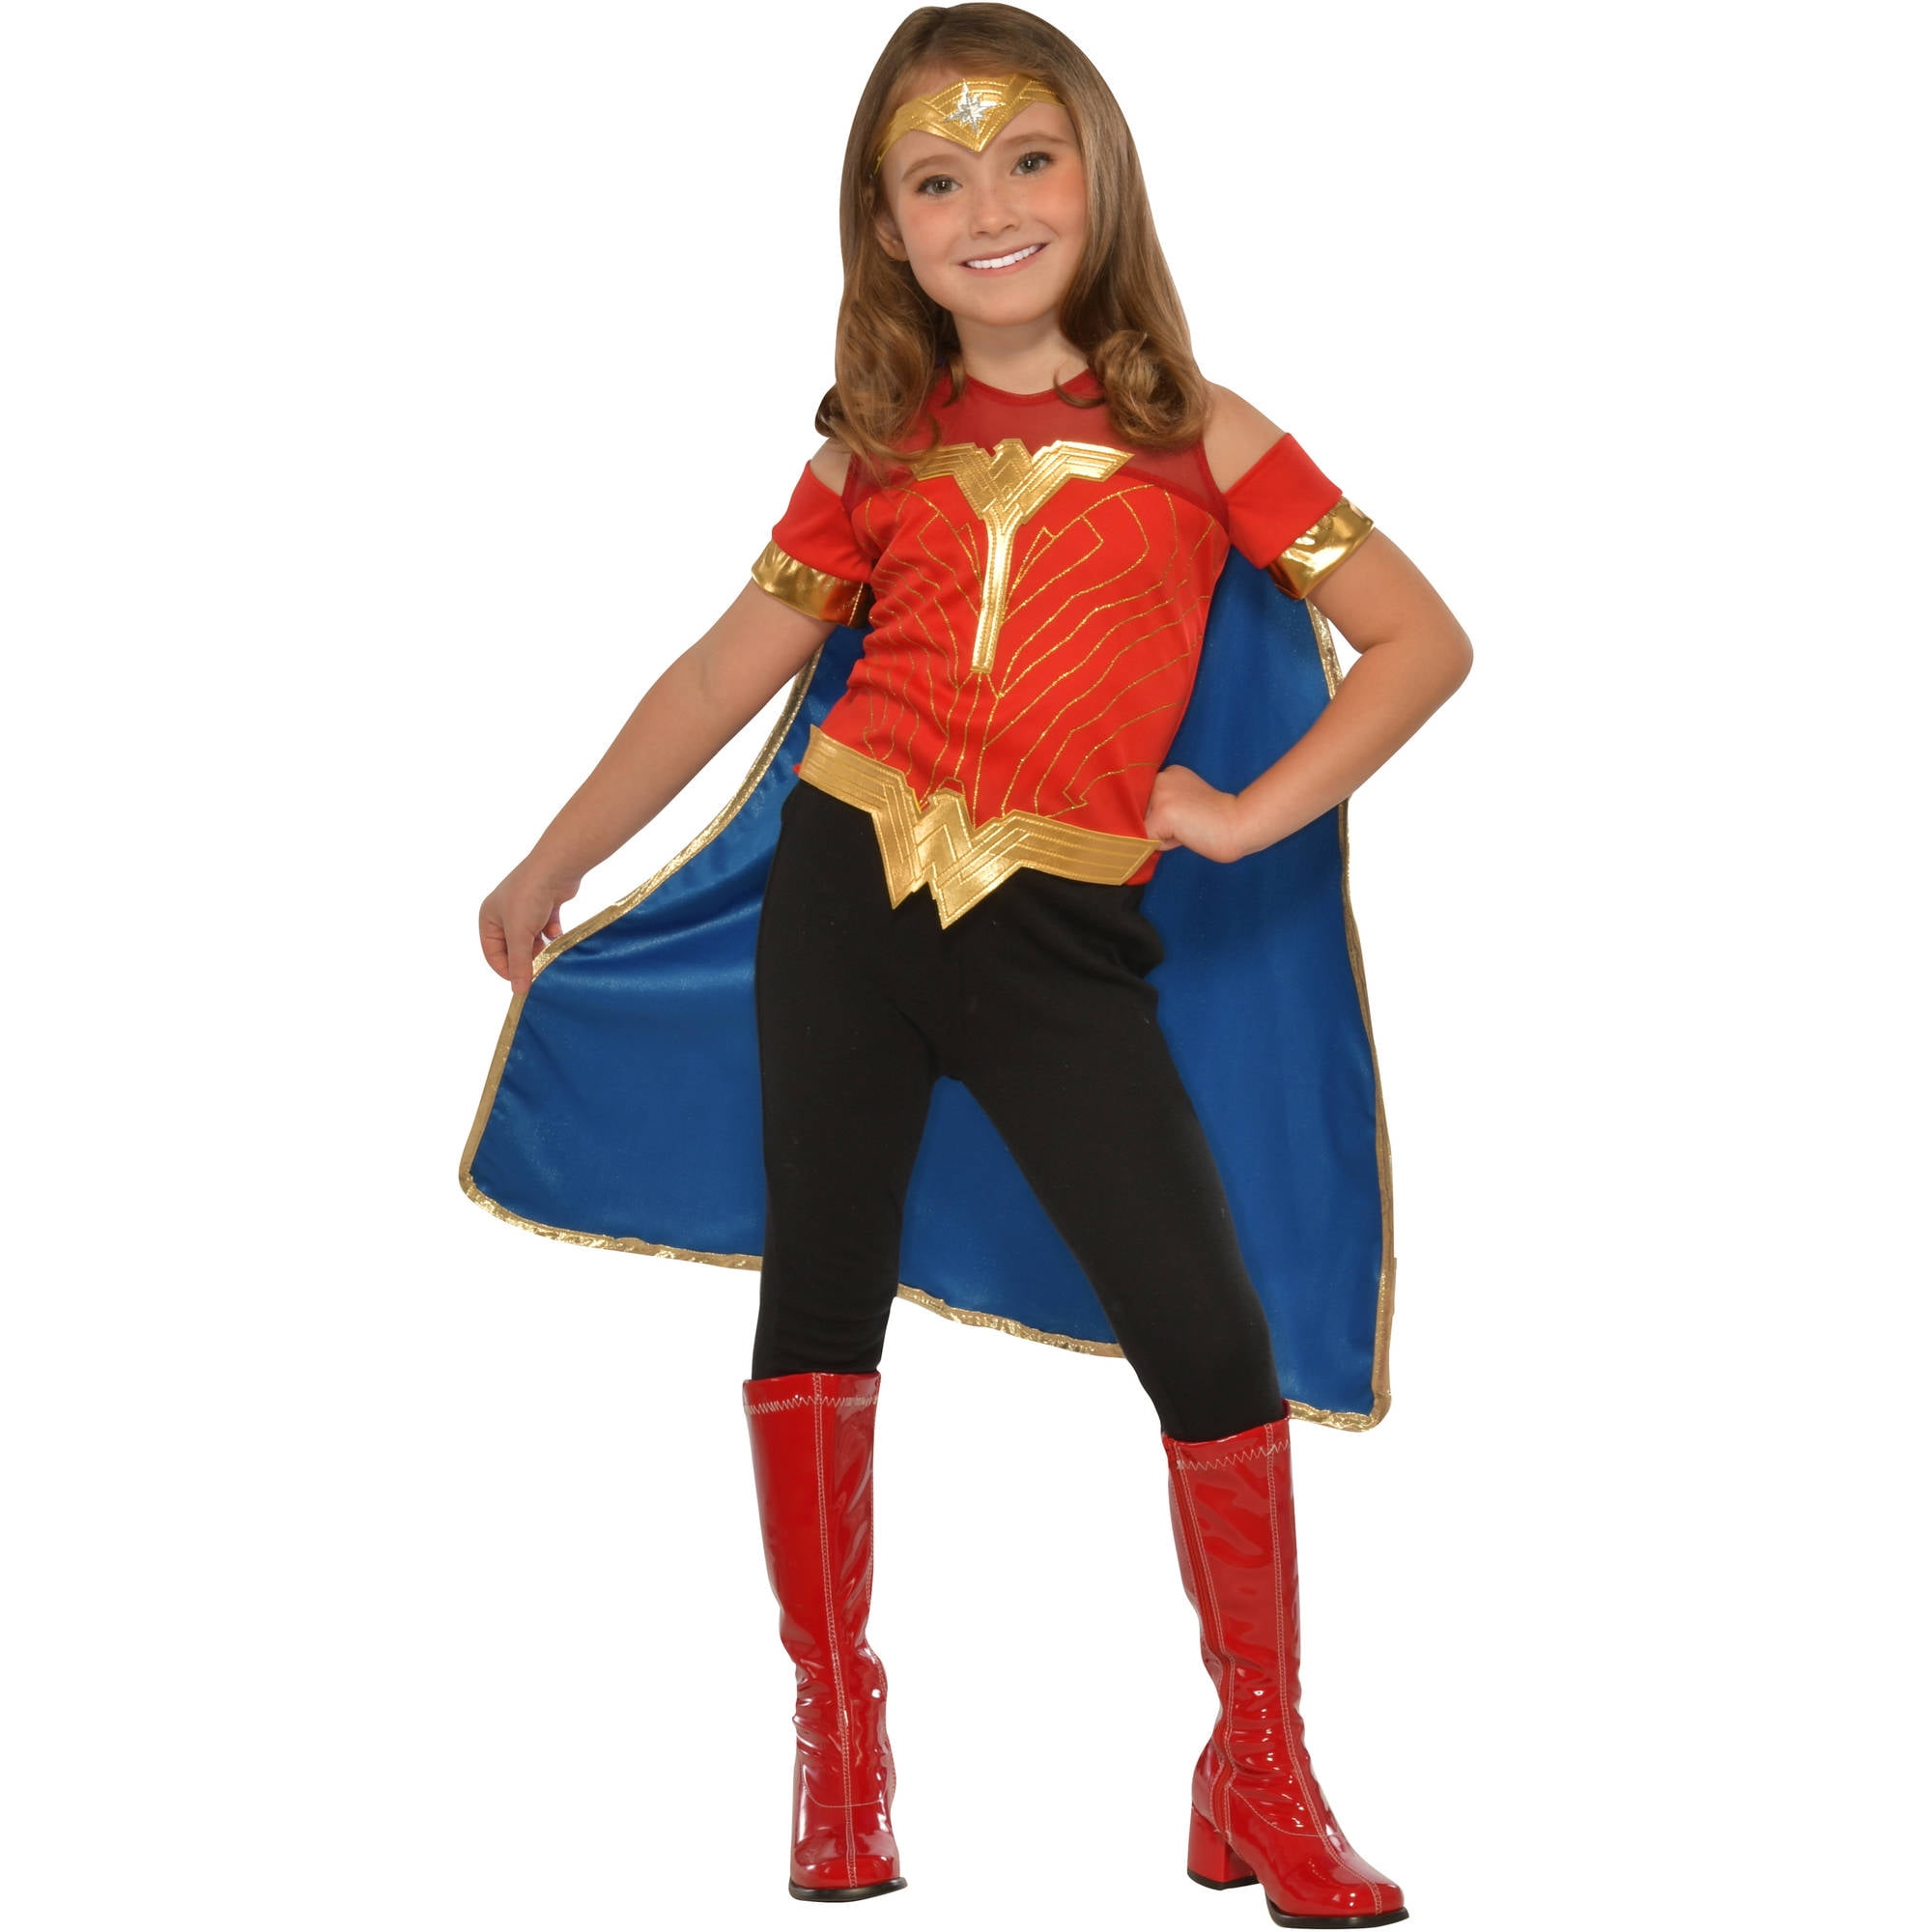 Wonder Woman Top and Cape Set Girls' Halloween Costume - Walmart.com - Walmart.com